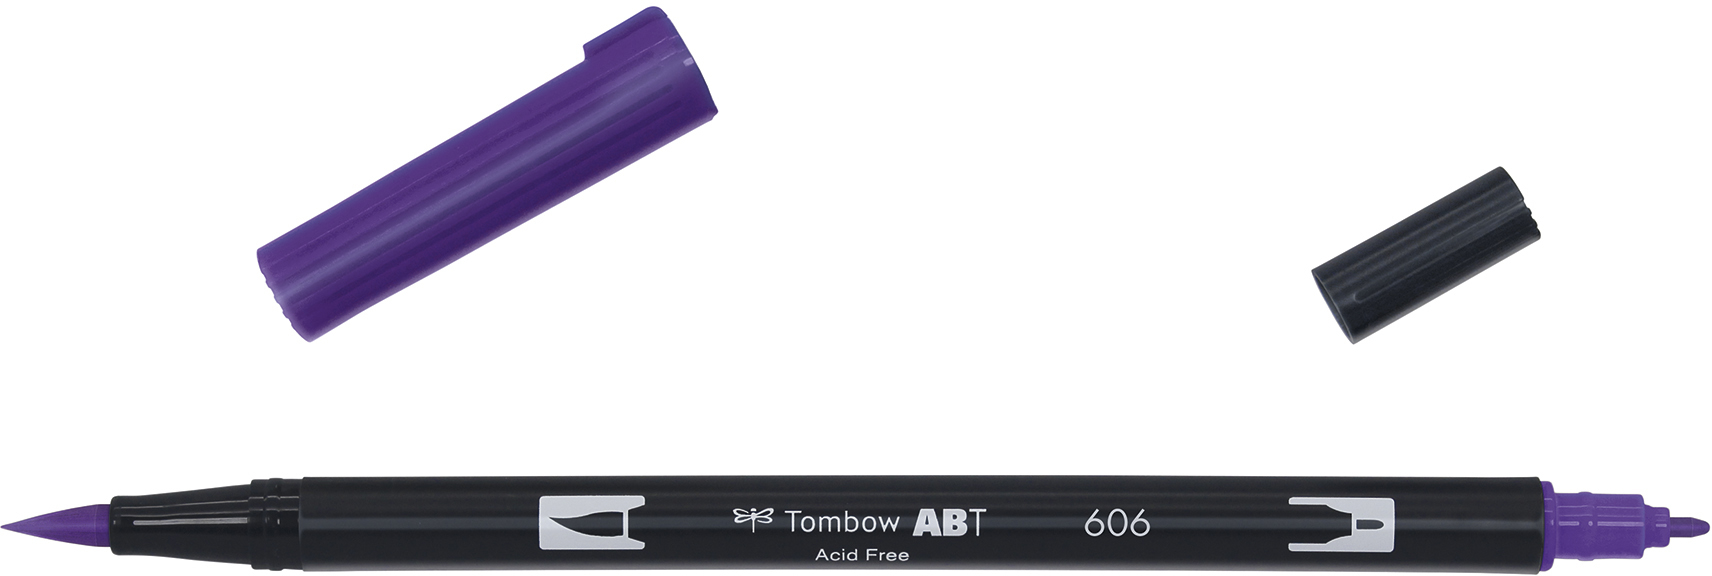 TOMBOW Dual Brush Pen ABT 606 violet violet